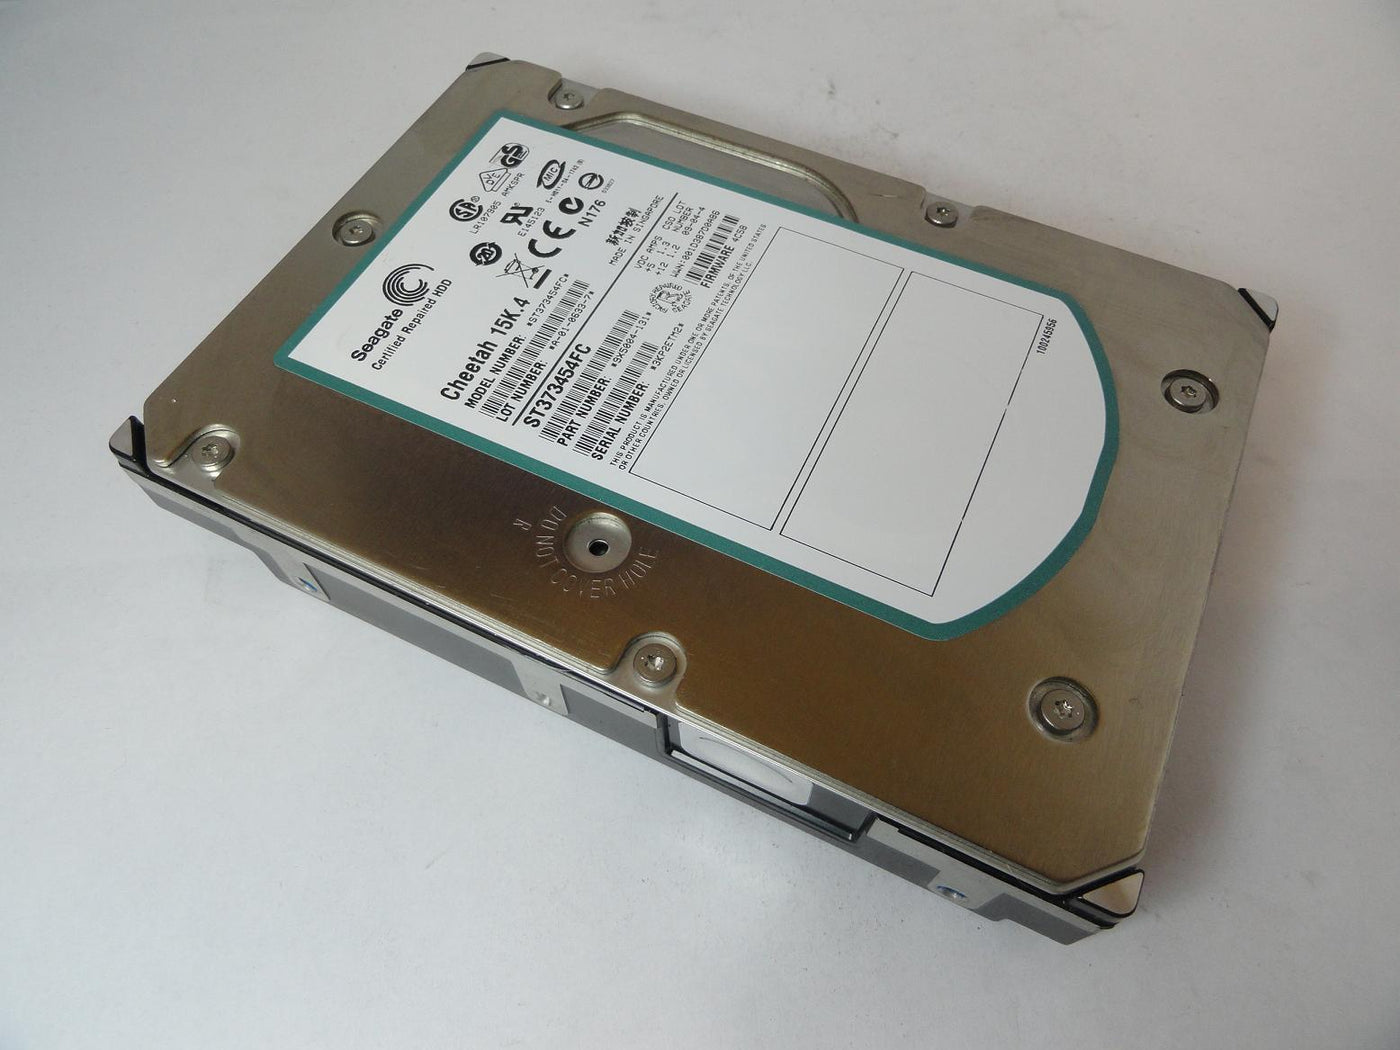 9X5004-131 - Seagate 73GB Fibre Channel 15Krpm 3.5in Certified Refurbished HDD - Refurbished